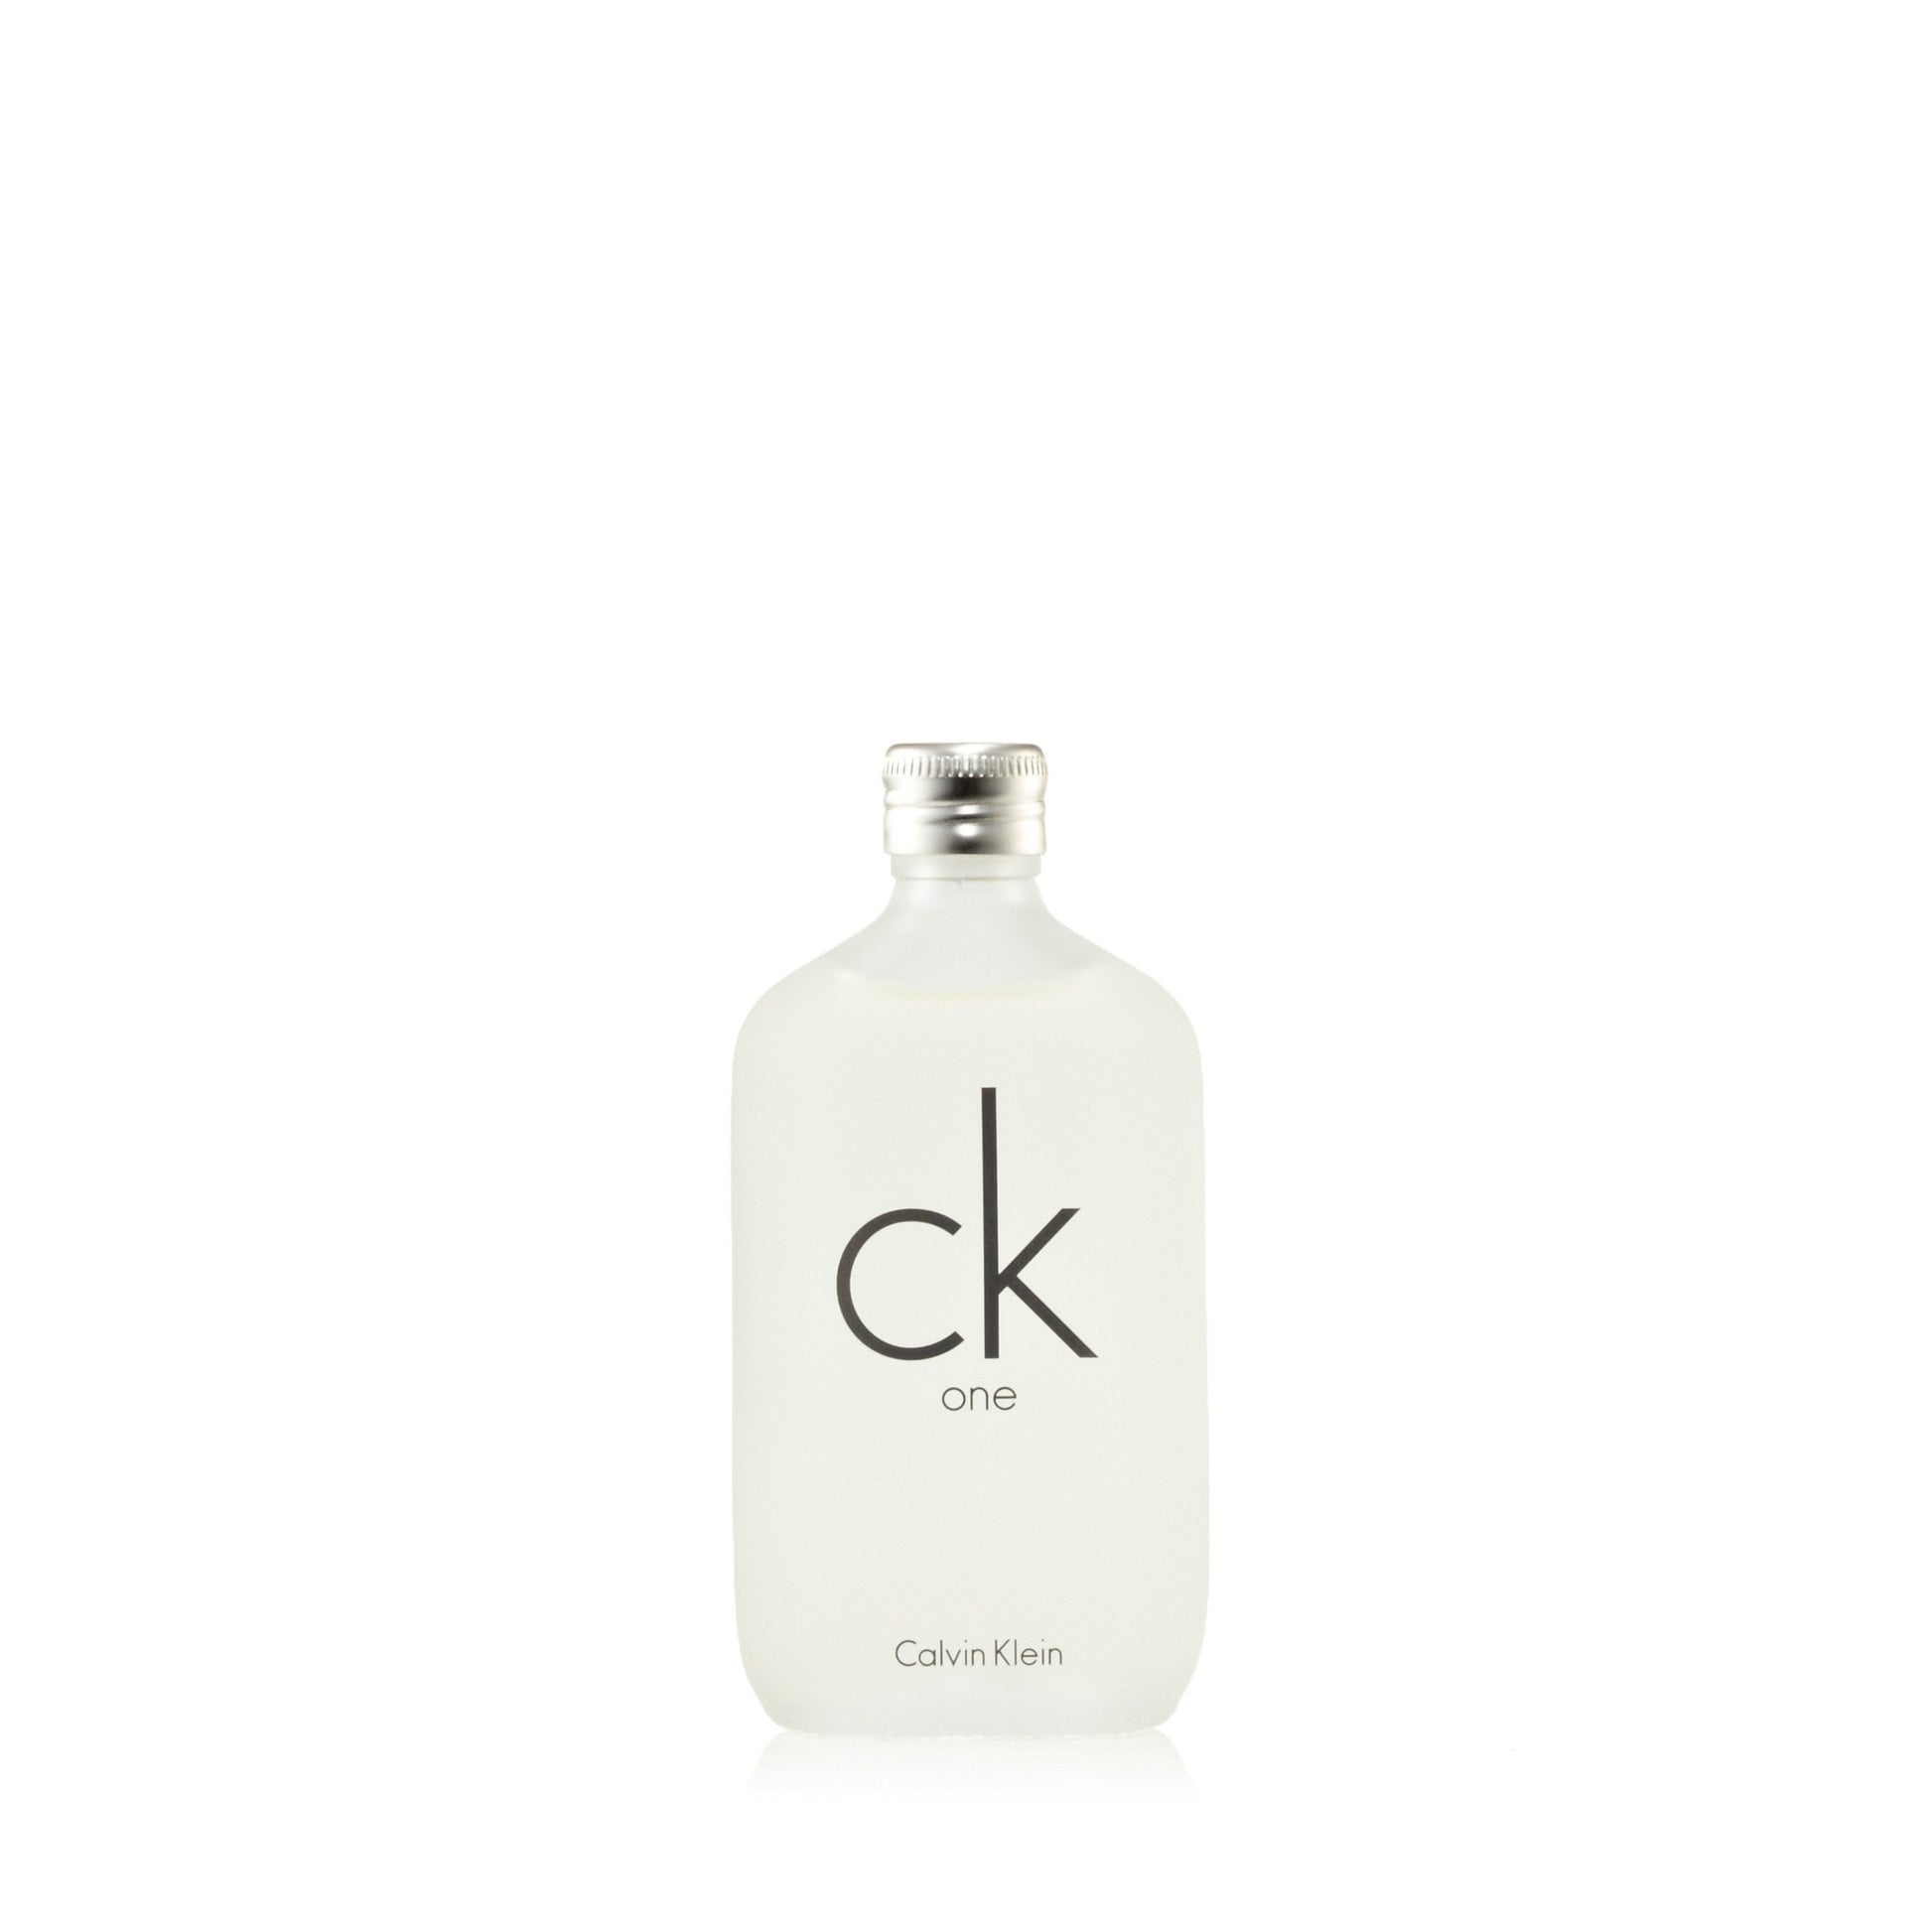 CK One Eau de Toilette Spray for Women and Men by Calvin Klein 1.7 oz. Click to open in modal